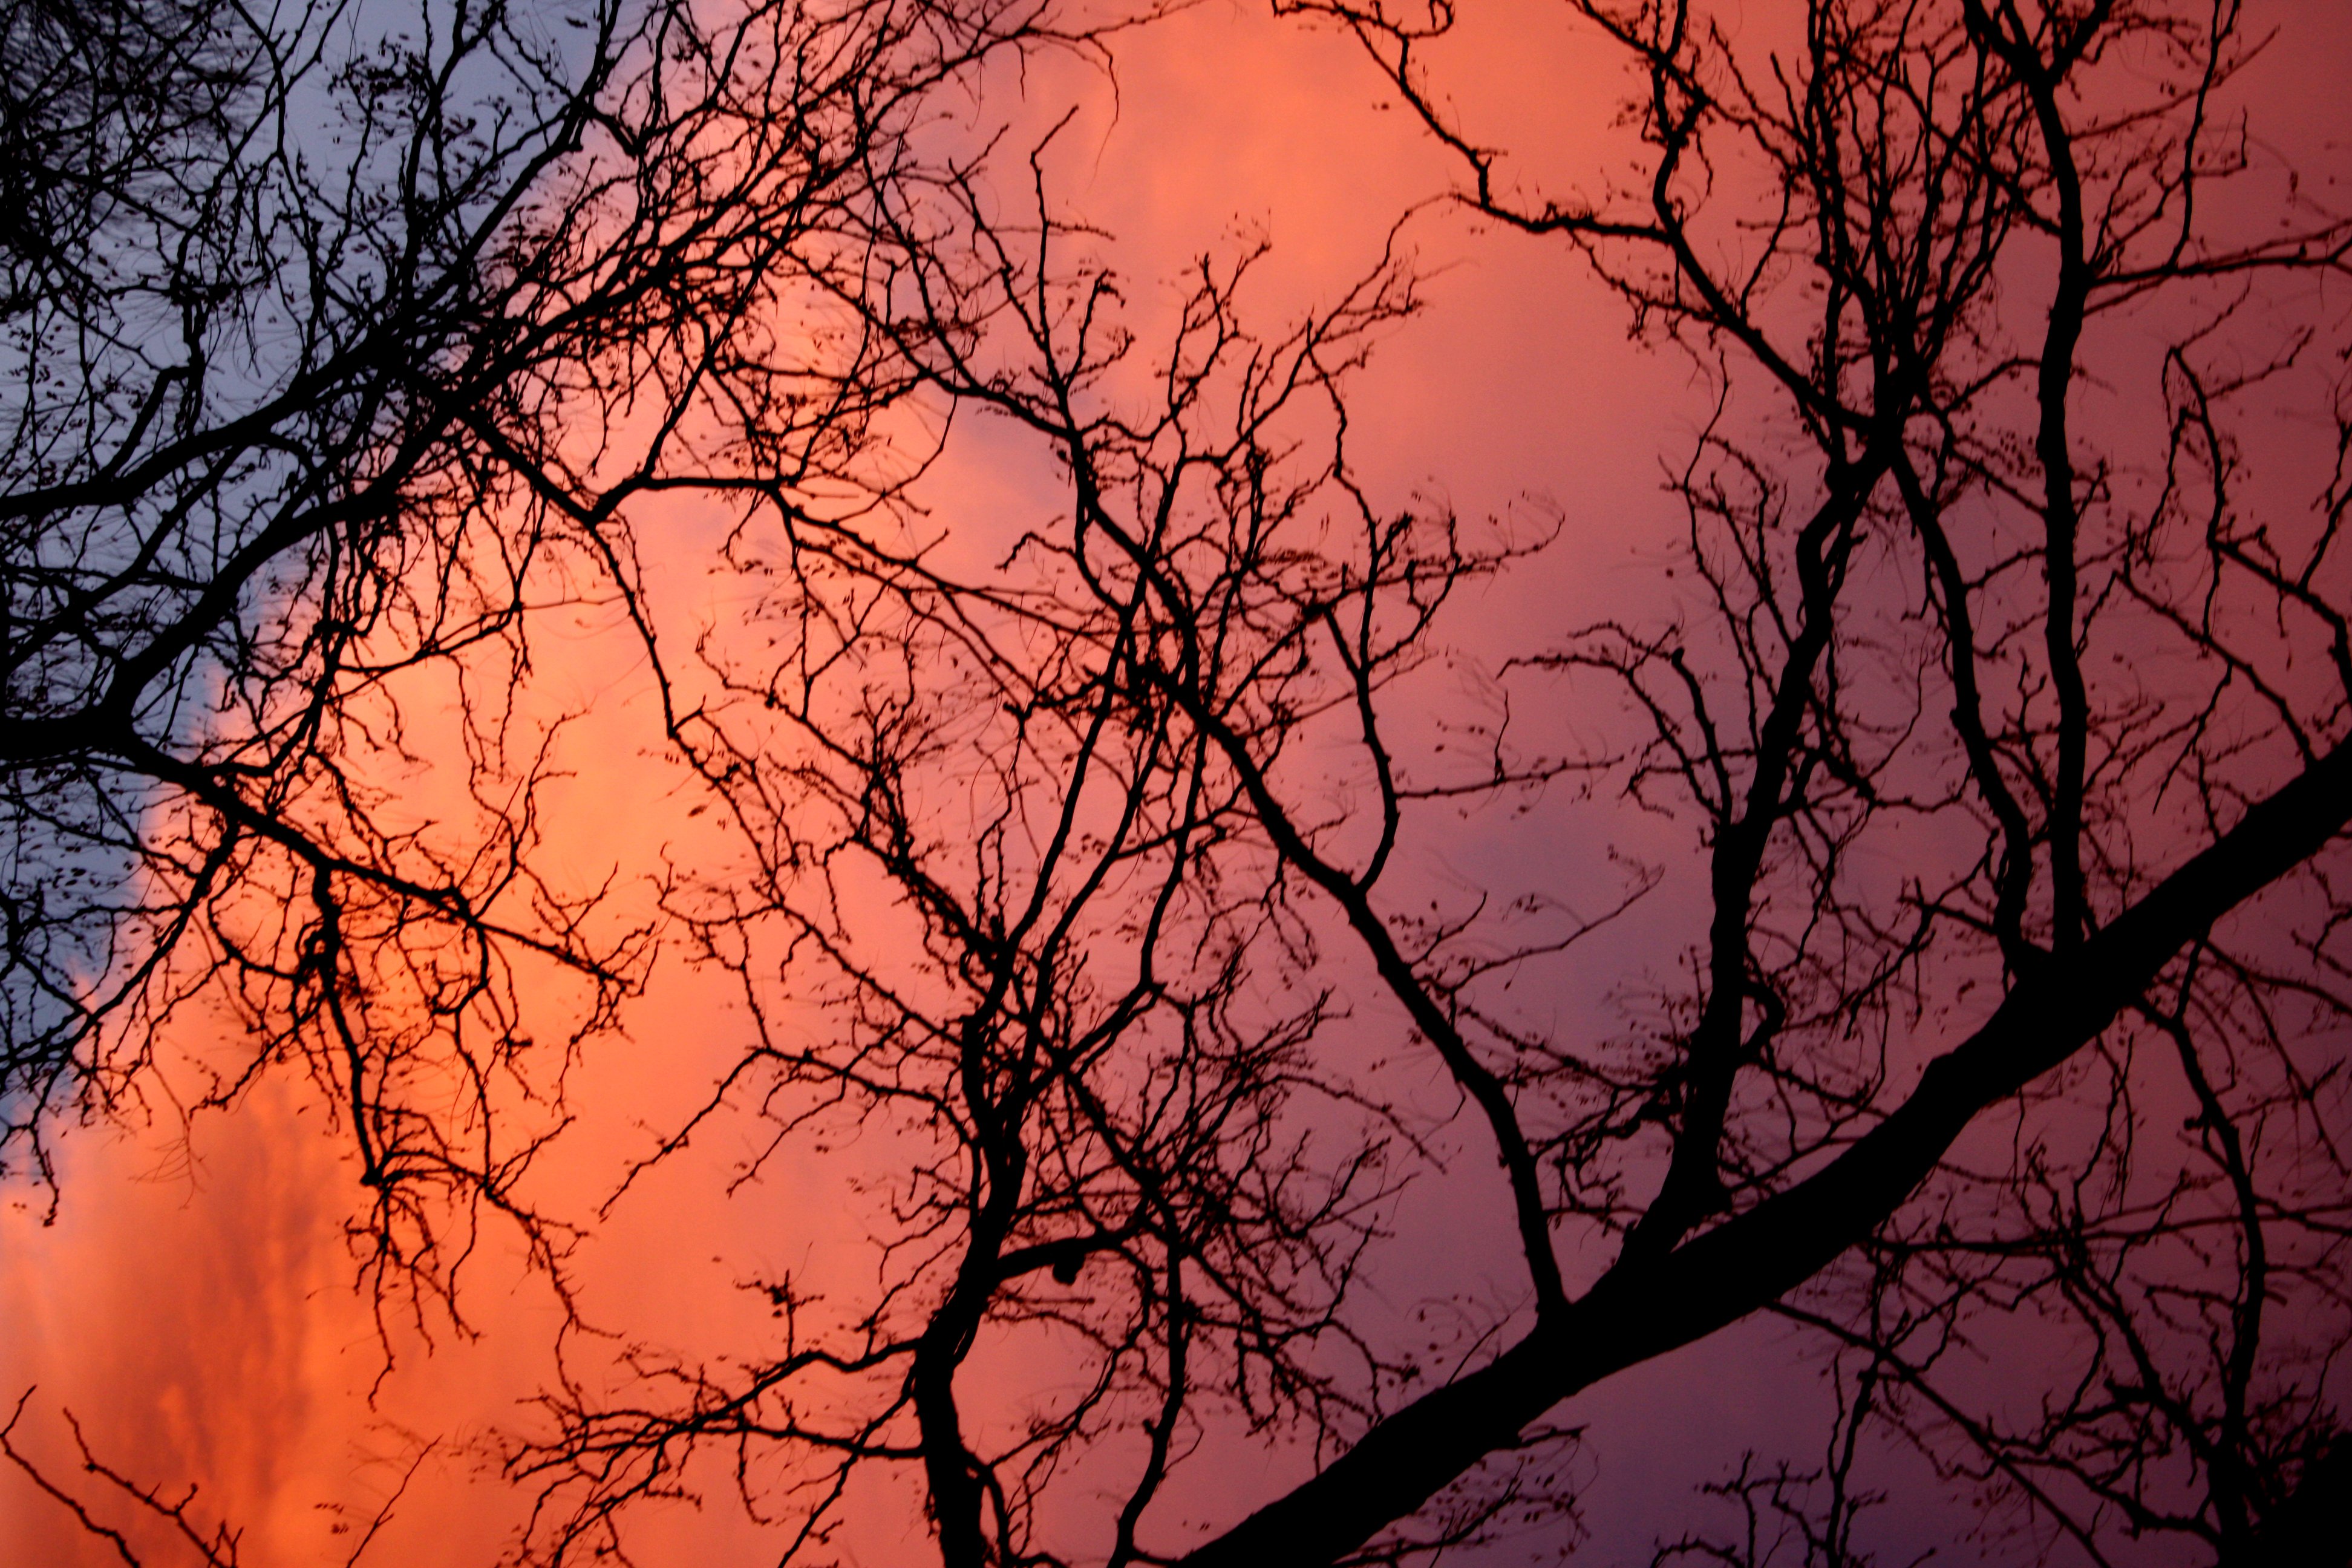 Orange sunset clouds behind winter tree branches